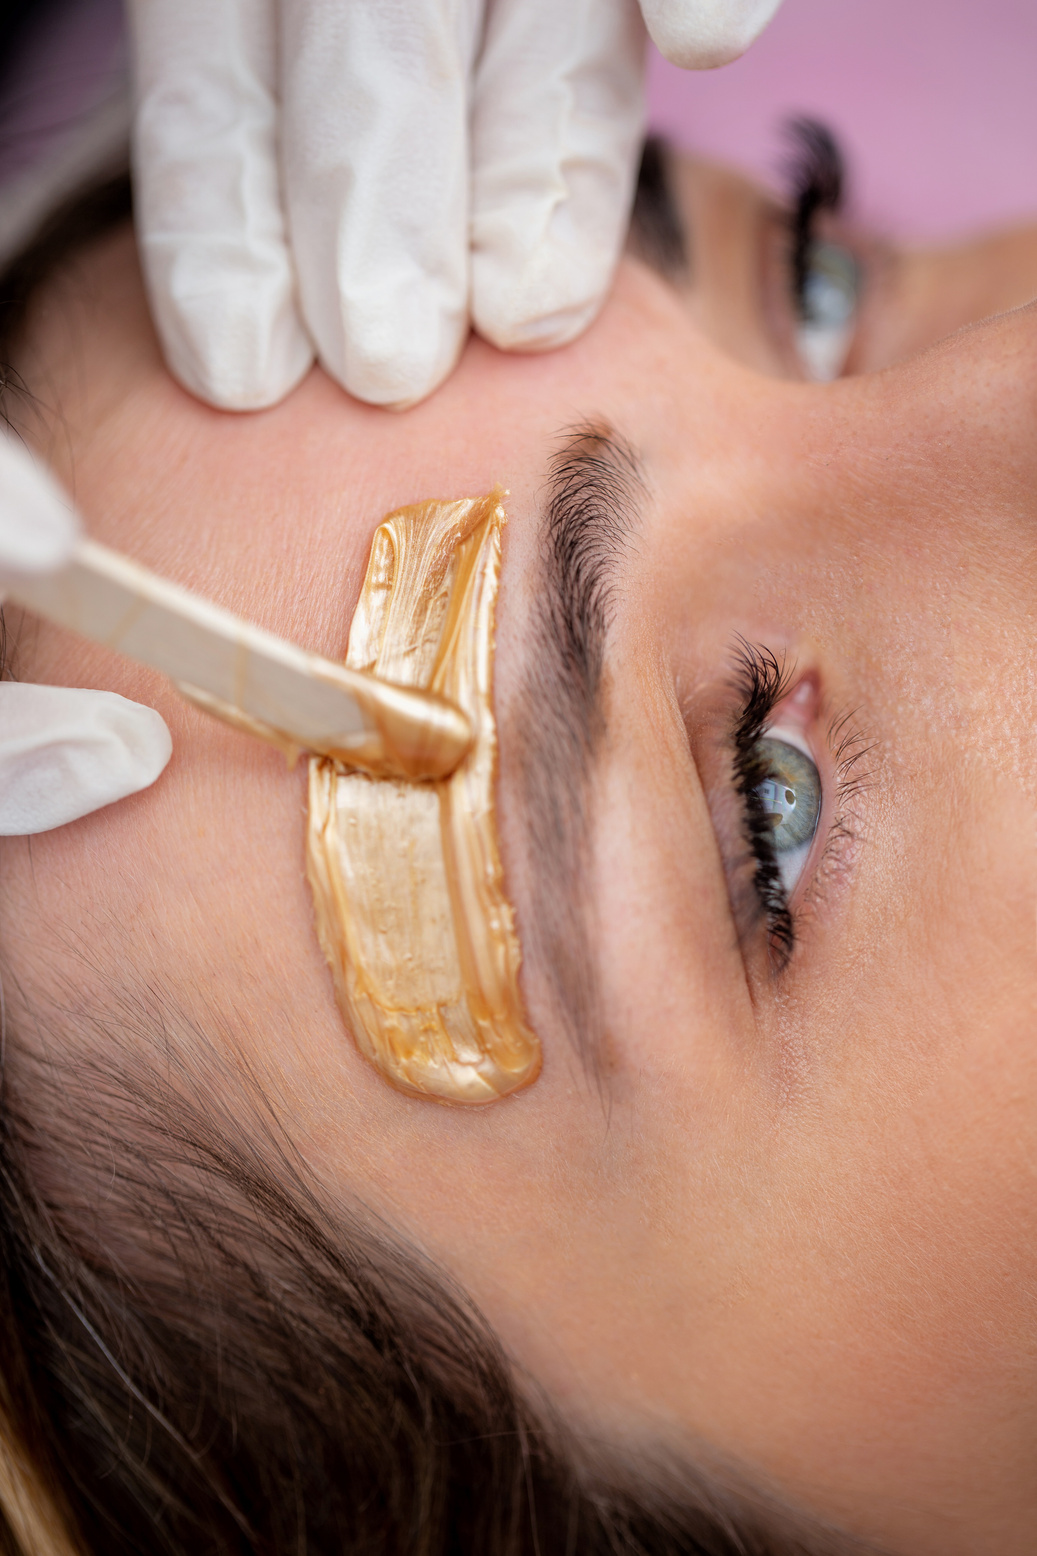 Woman Getting Eyebrow Waxing - stock photo